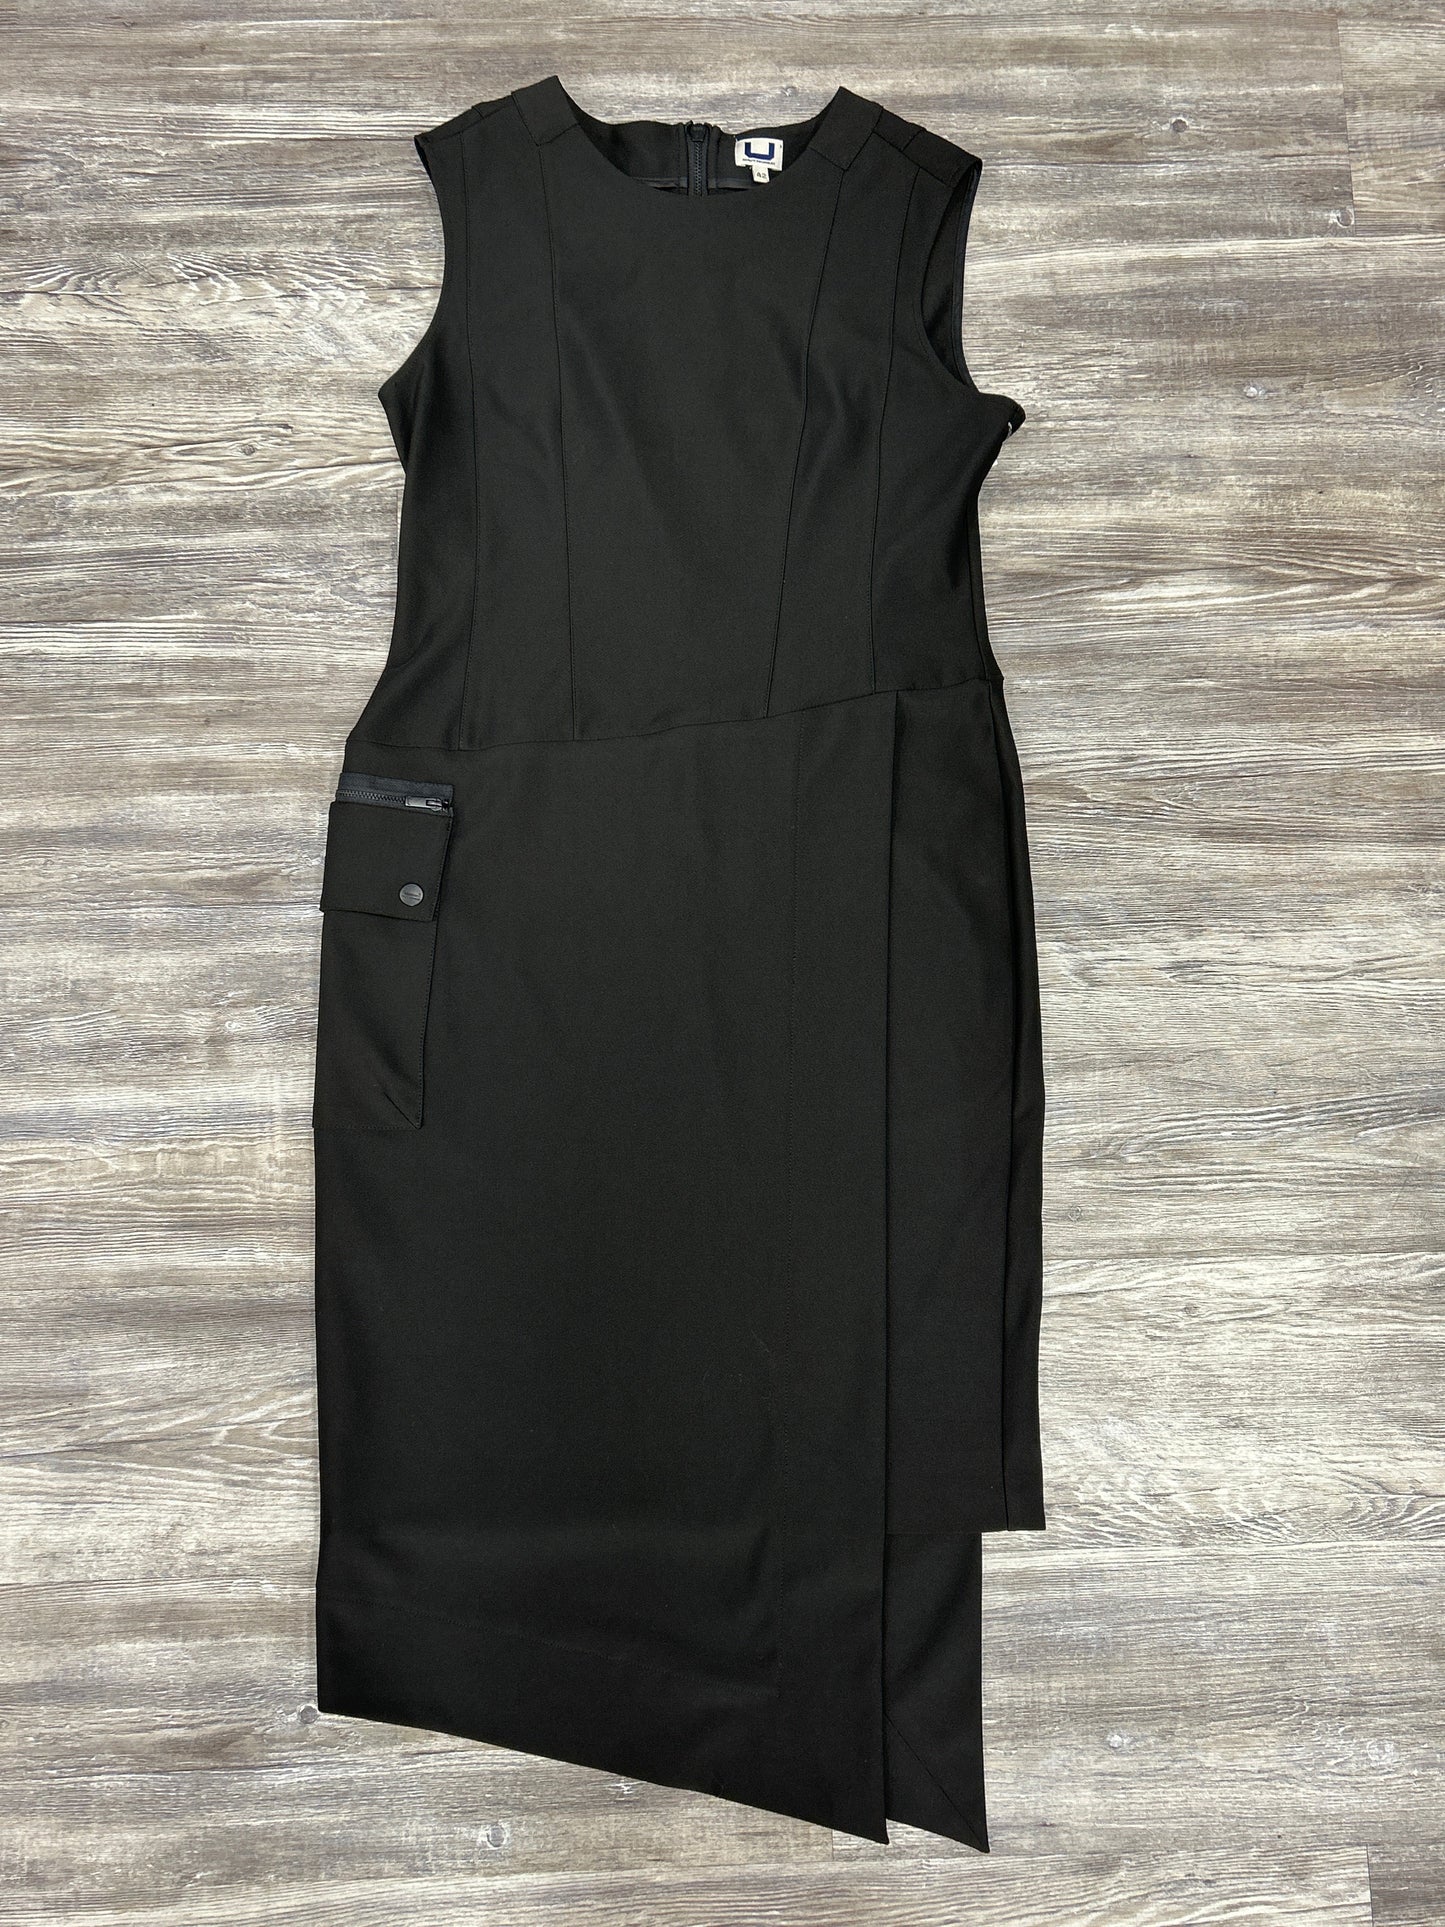 Black Dress Party Midi Cma, Size 8